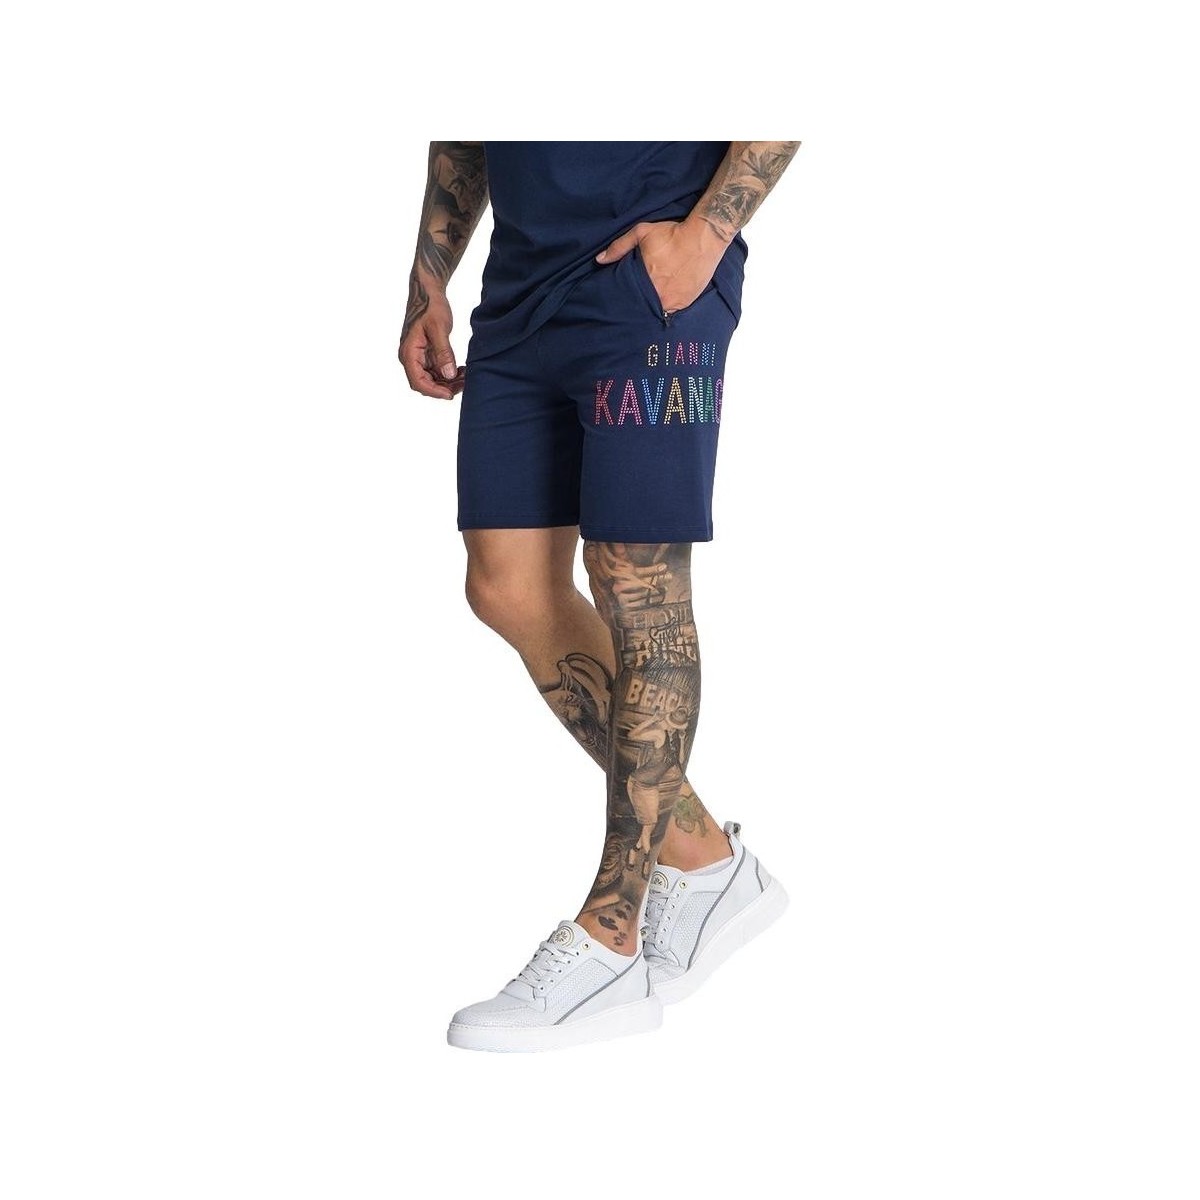 textil Shorts / Bermudas Gianni Kavanagh Pantalon  Formentera Marino Azul